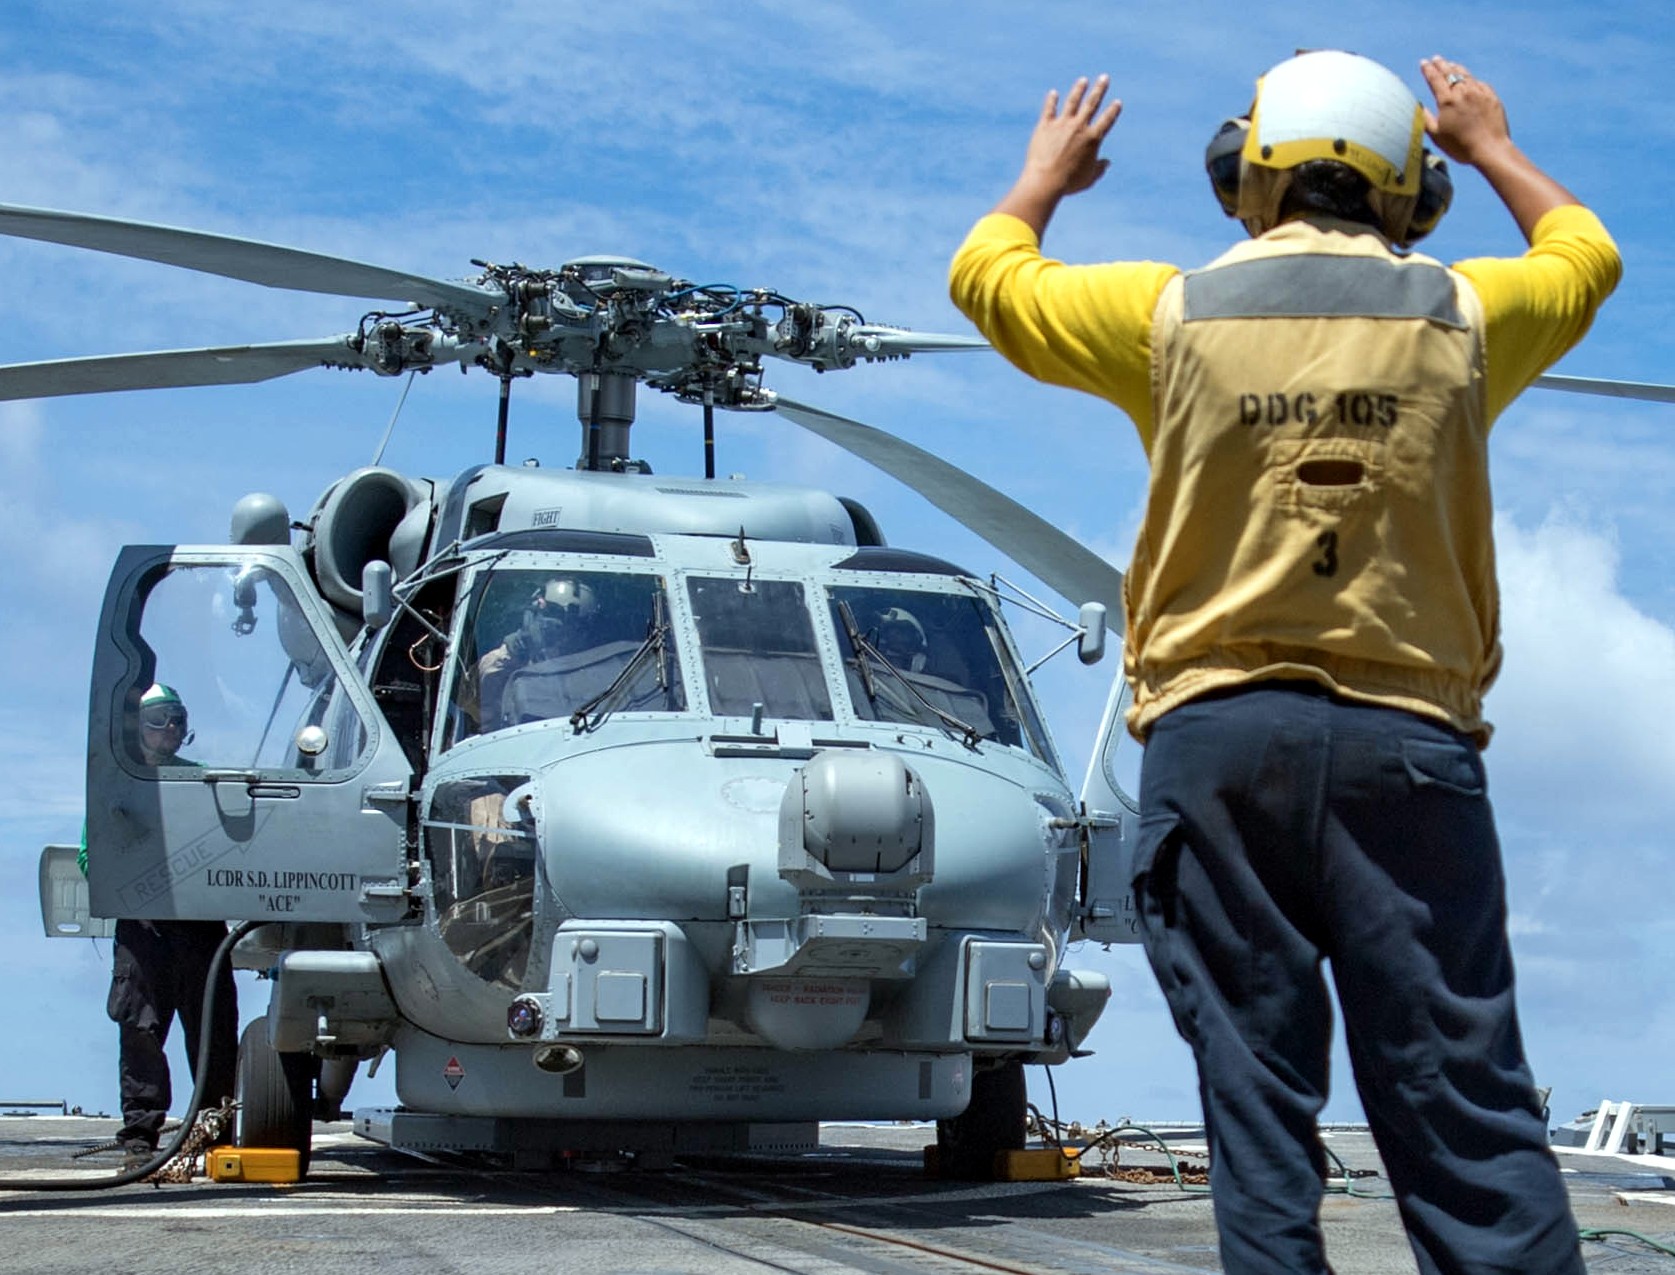 hsm-78 blue hawks helicopter maritime strike squadron mh-60r seahawk us navy 2017 35 uss dewey ddg-105